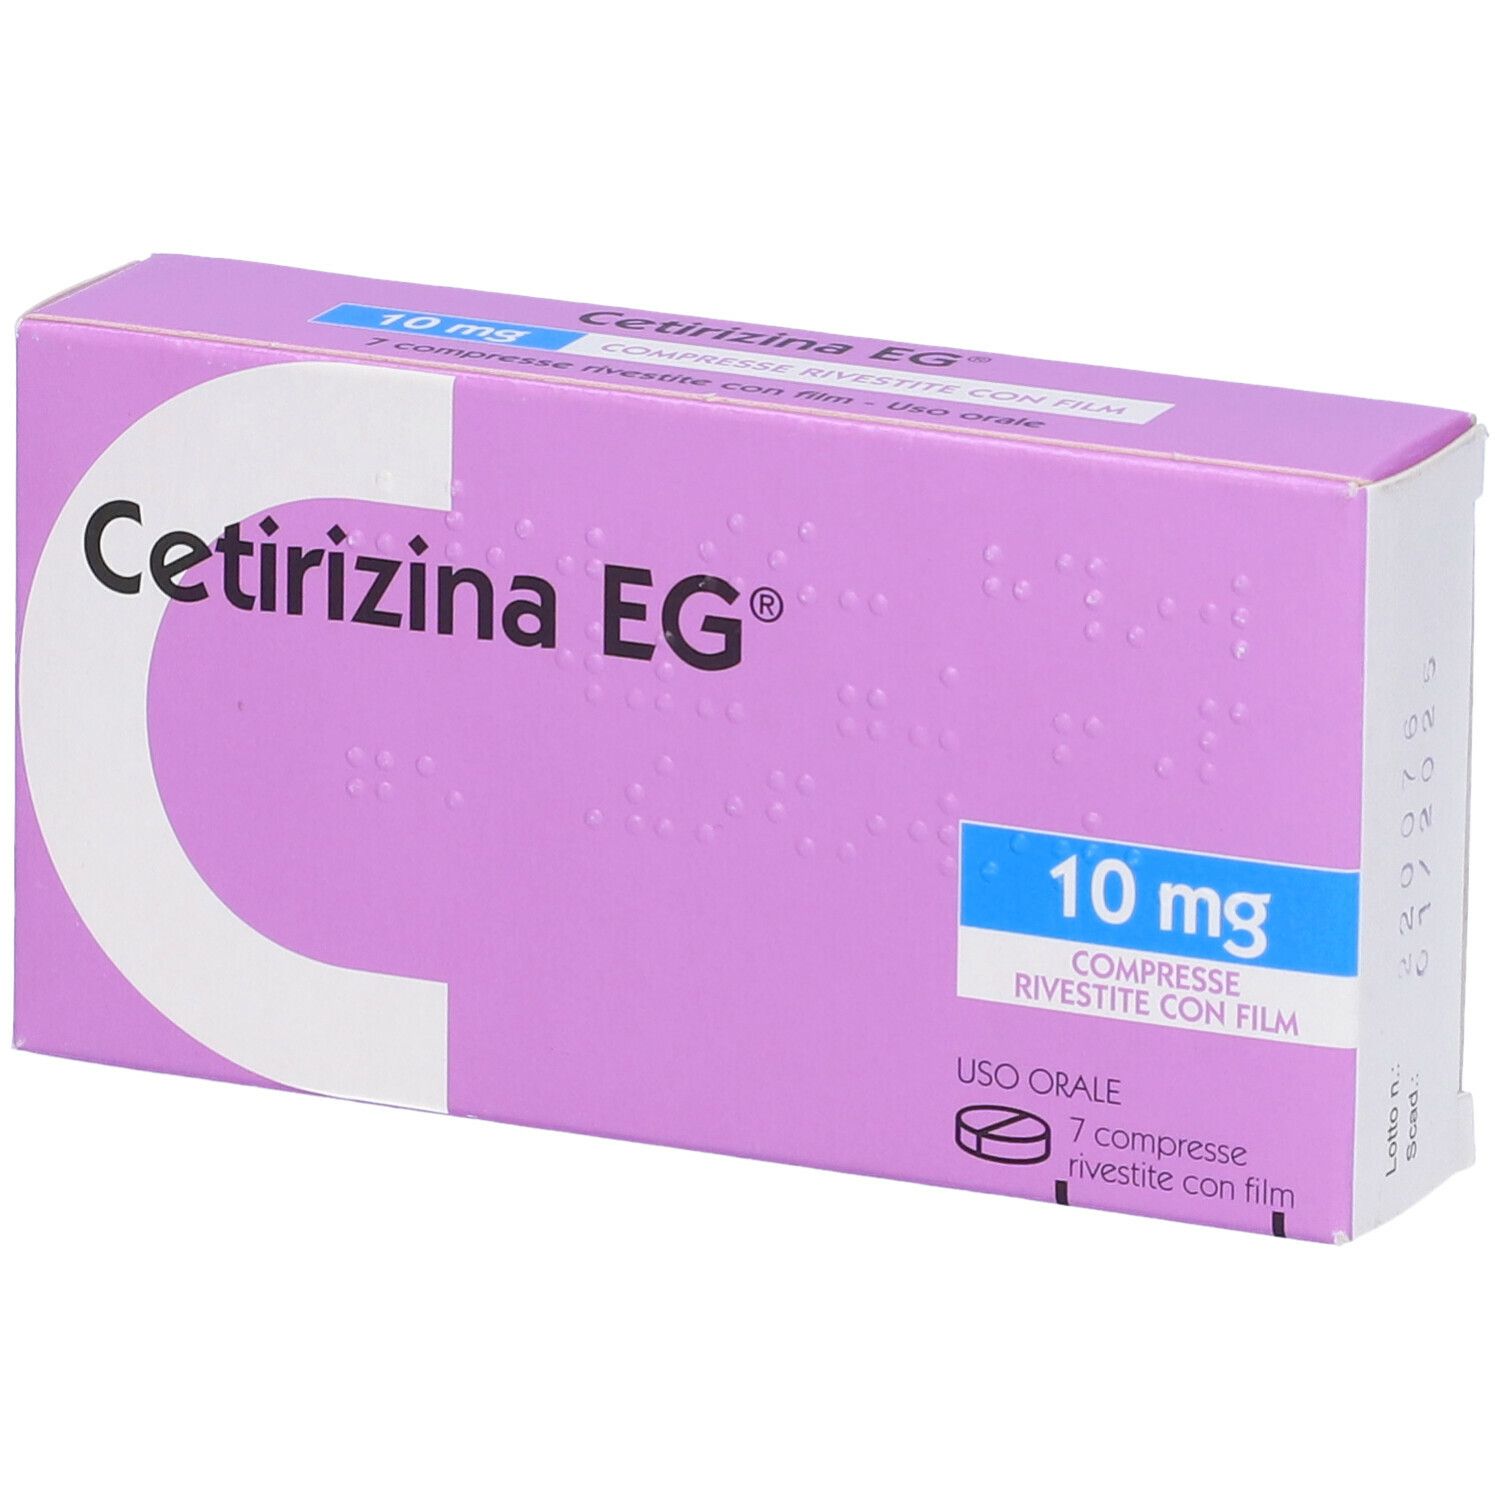 CETIRIZINA EG 10 mg compresse rivestite con film